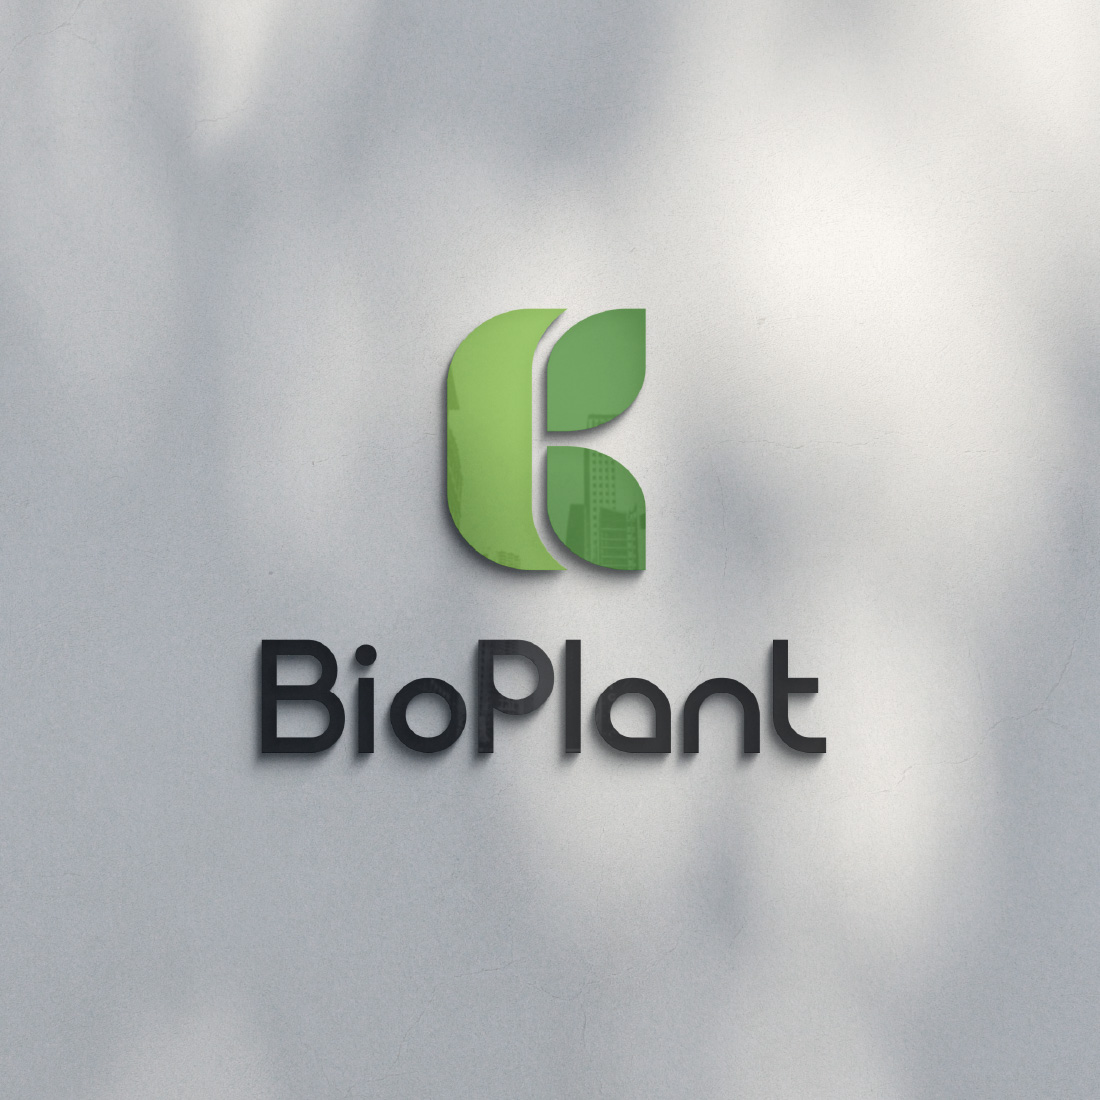 Bio plant agriculture botanical leaf logo preview image.